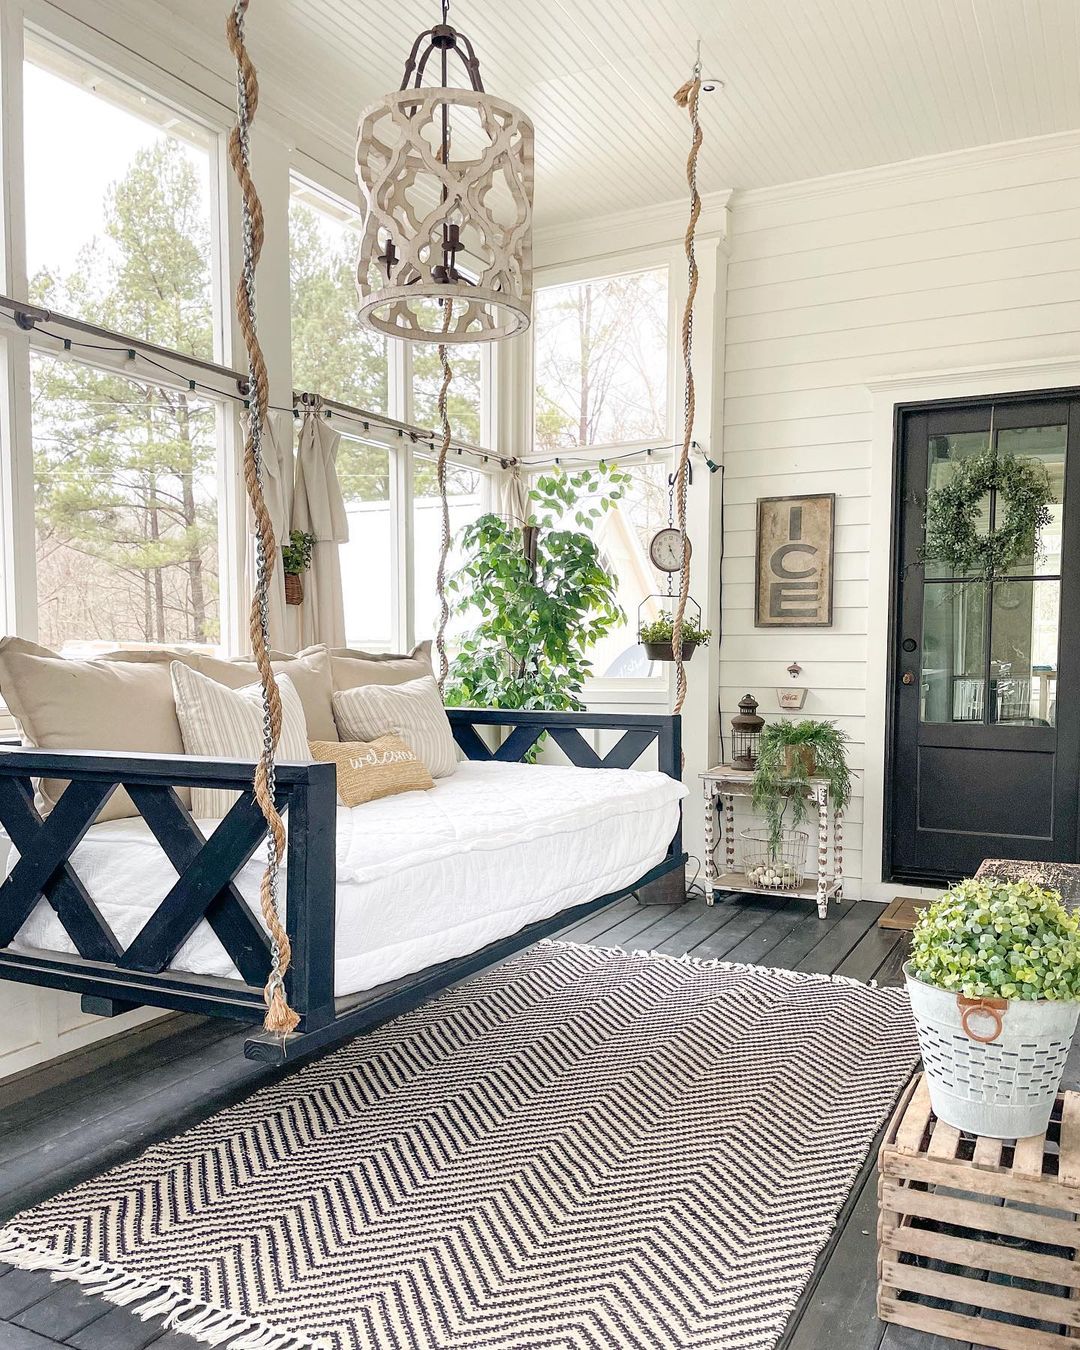 Farmhouse Sunroom with a Hanging Swing. Photo by Instagram user @bigfamilylittlefarmhouse